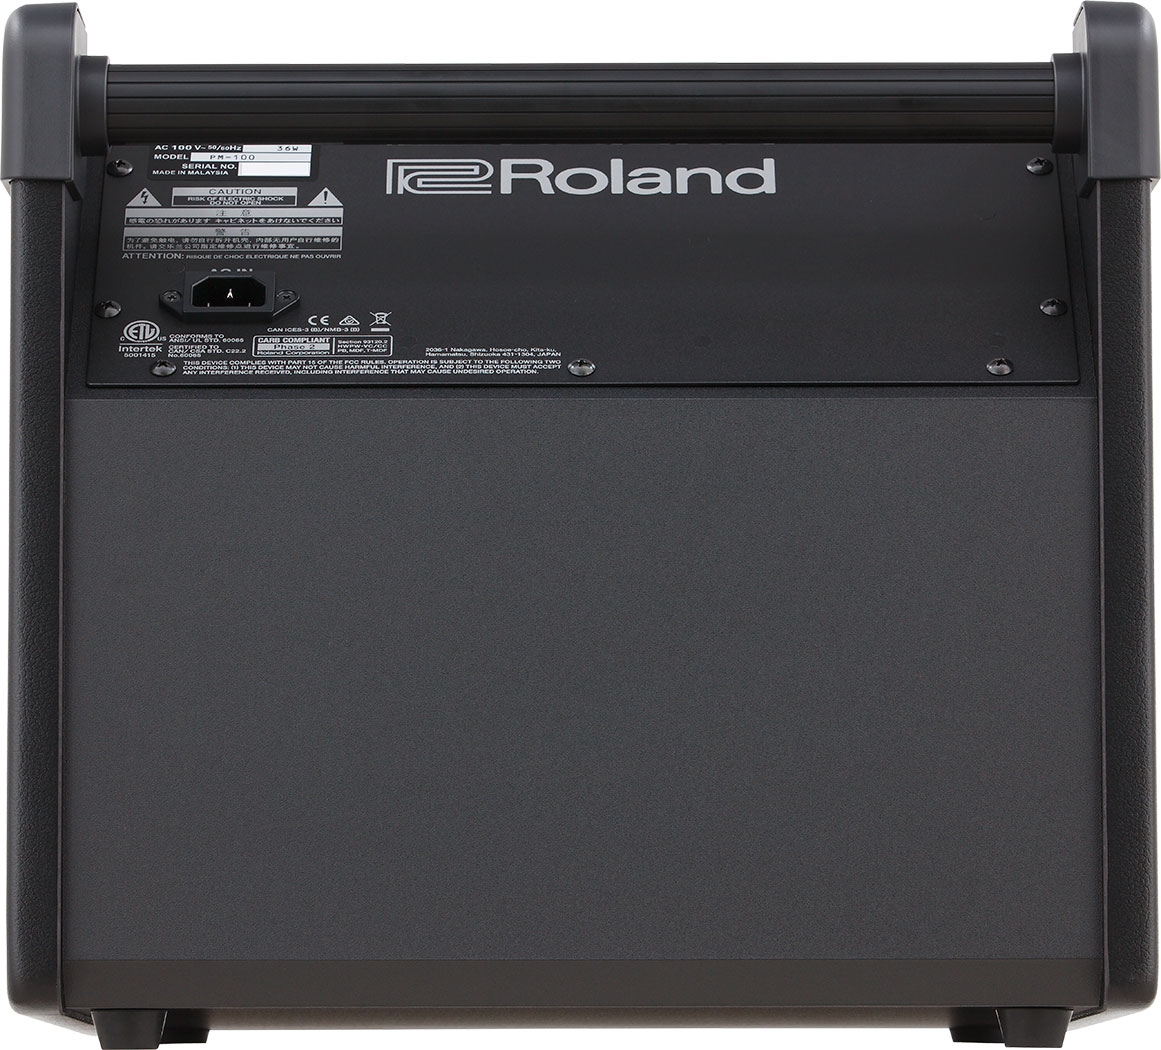 Roland Pm-100 - Electronic drum monitoring - Variation 2